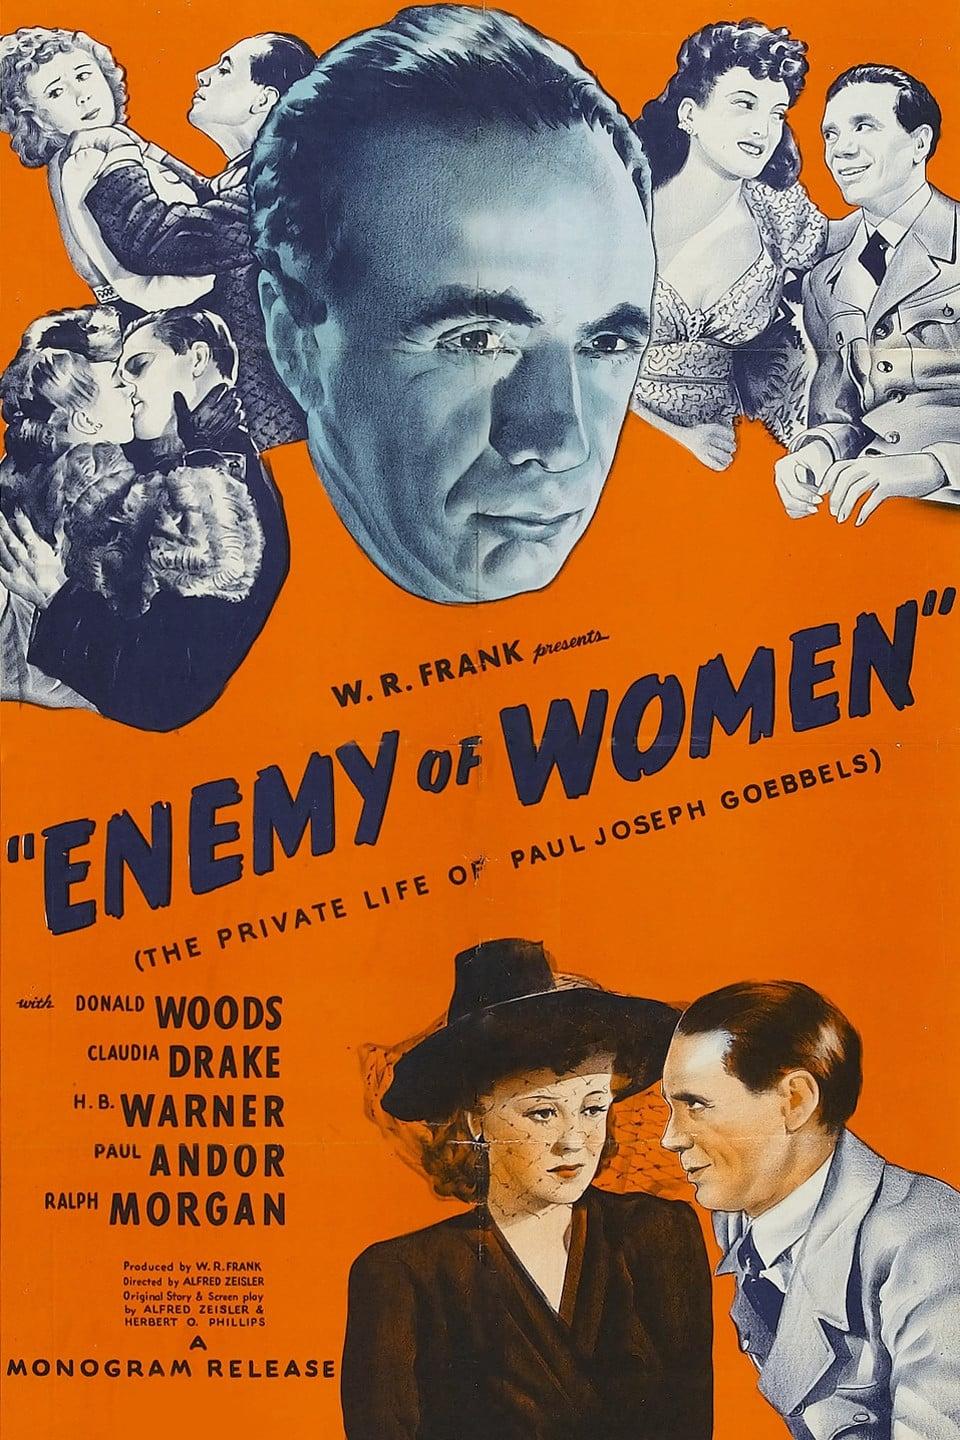 Enemy of Women poster